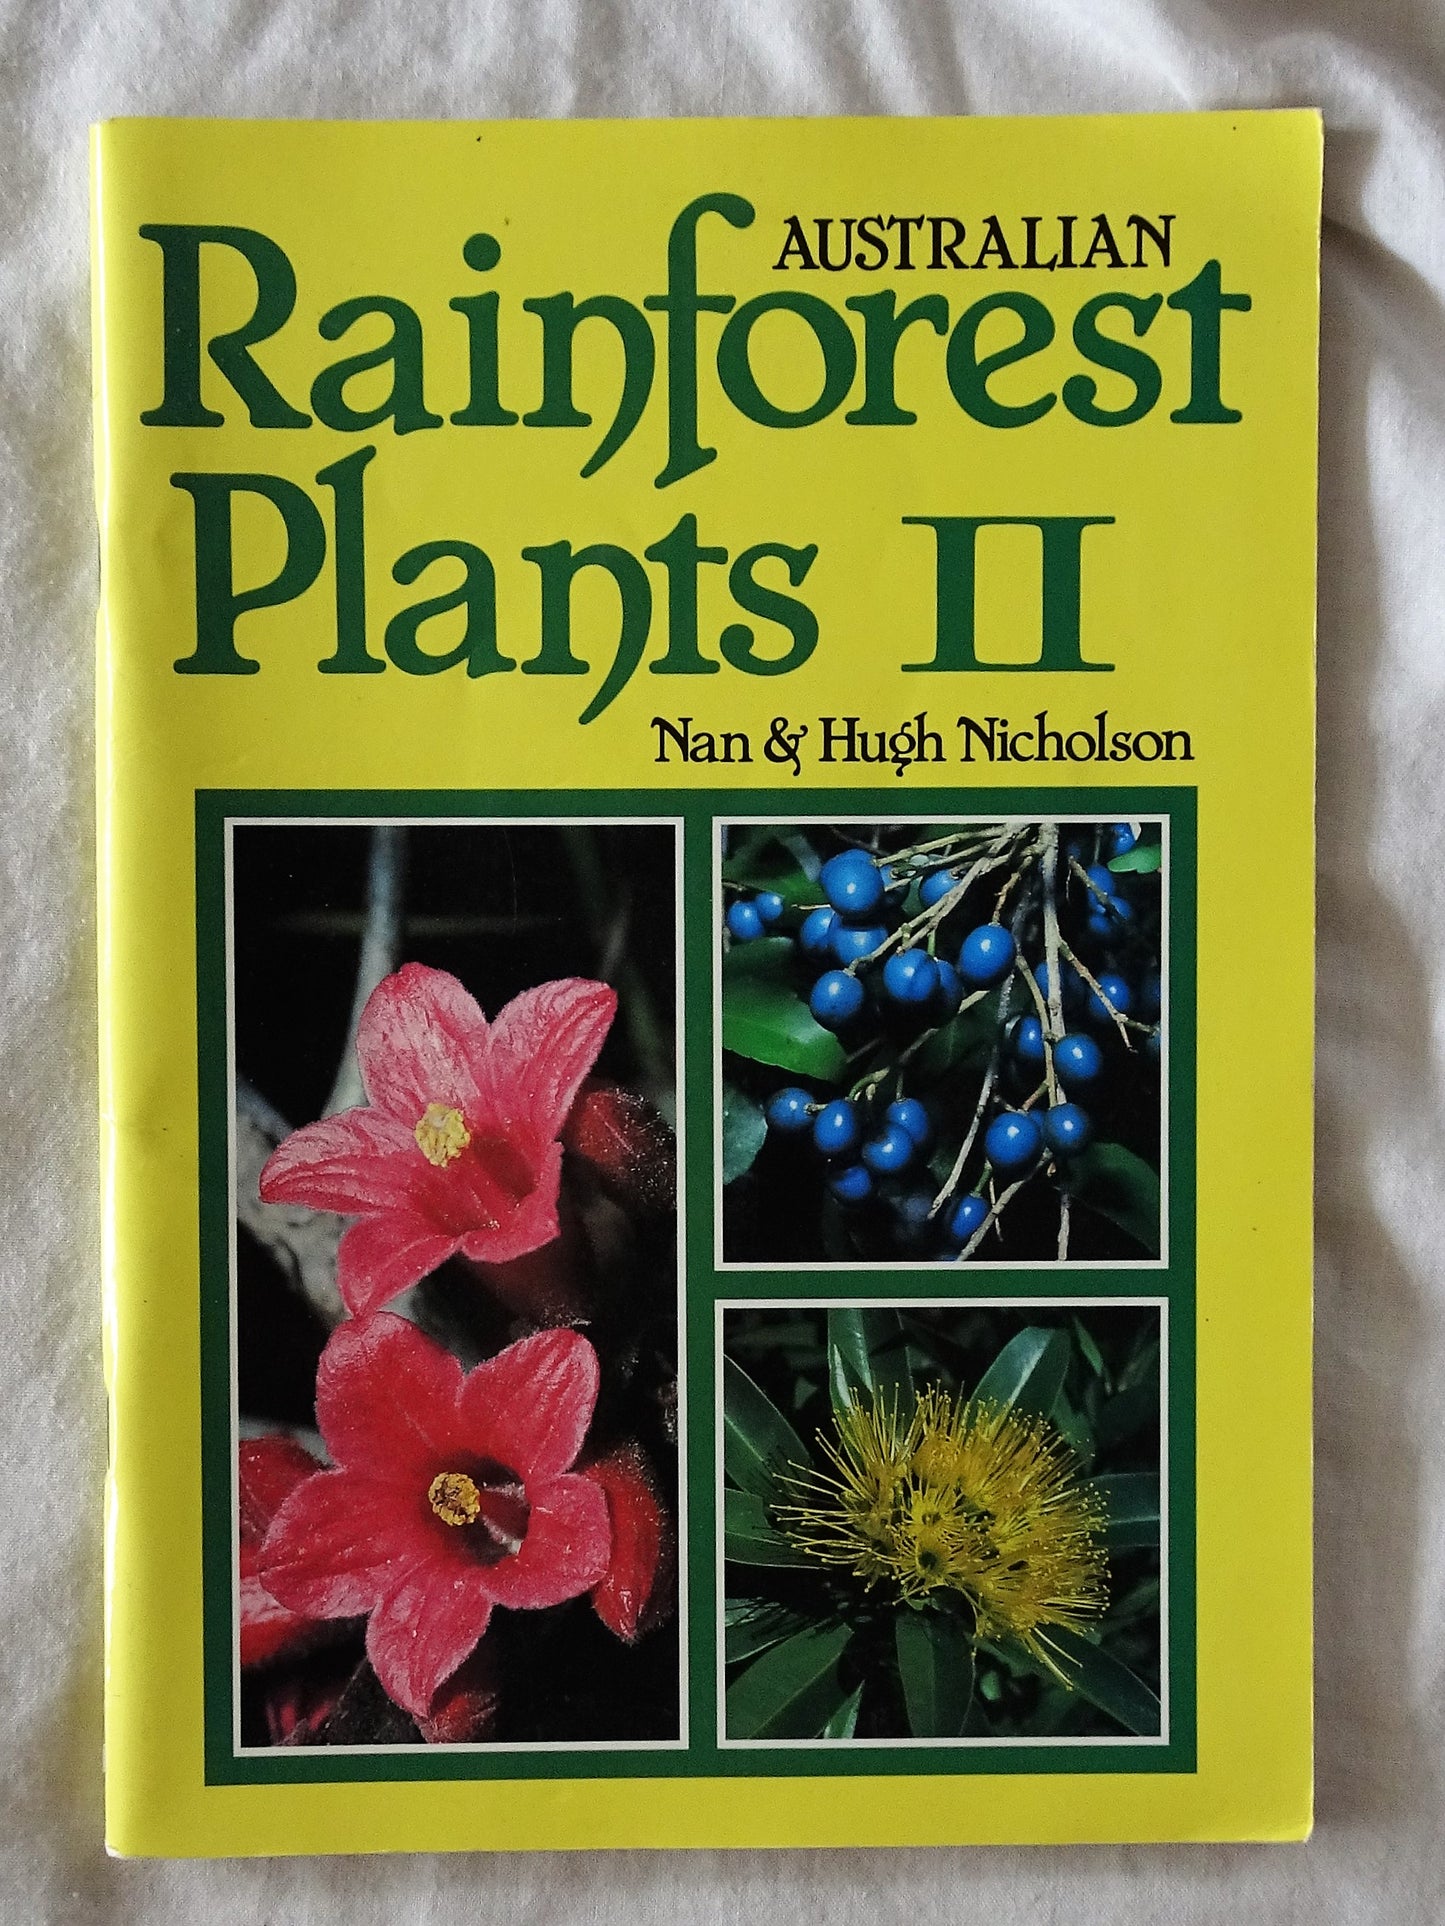 Australian Rainforest Plants II by Nan & Hugh Nicholson